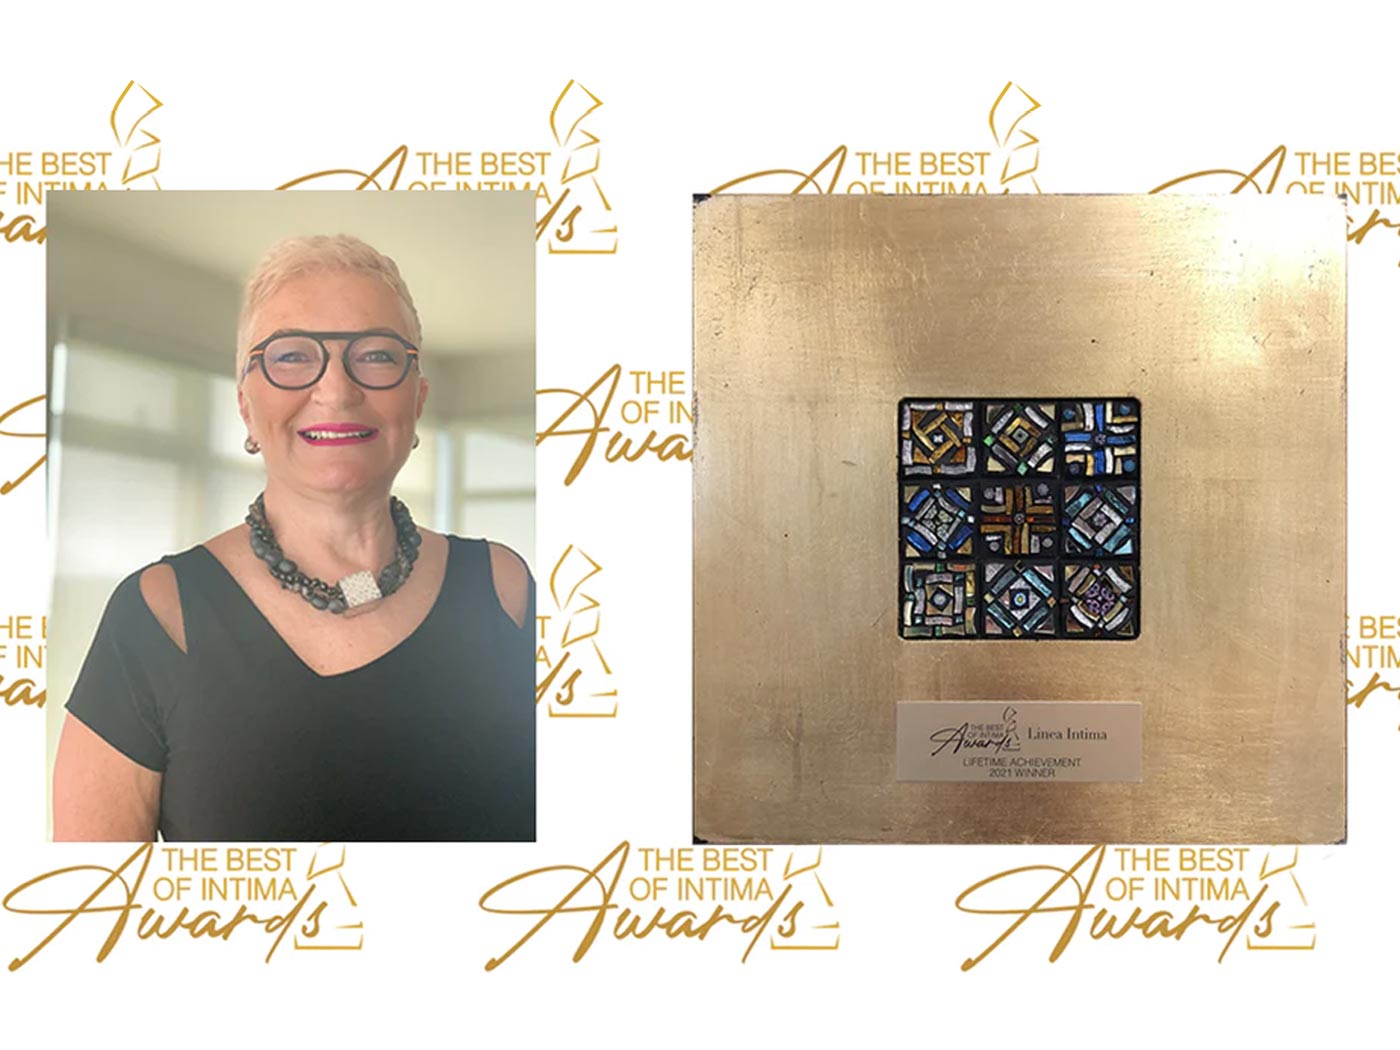 The Best of Intima Awards Lifetime Achievement Award Receipt is Linea Intima